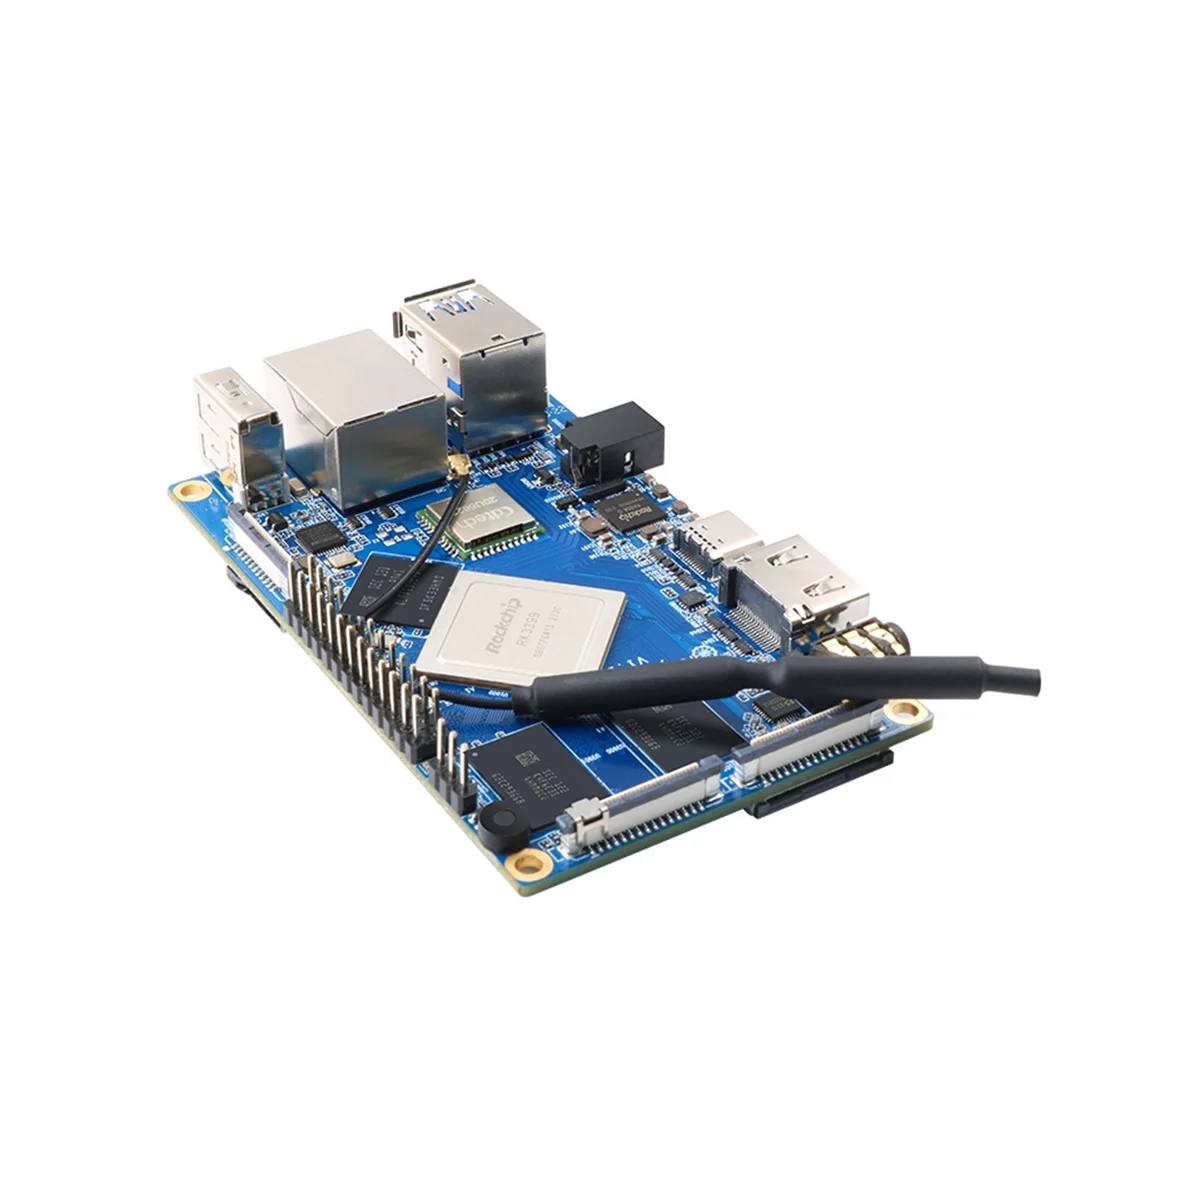 

For Orange Pi 4 LTS 4GB+Aluminum Case Rockchip RK3399 16GB EMMC Development Board Gigabit Ethernet for Android/Ubuntu